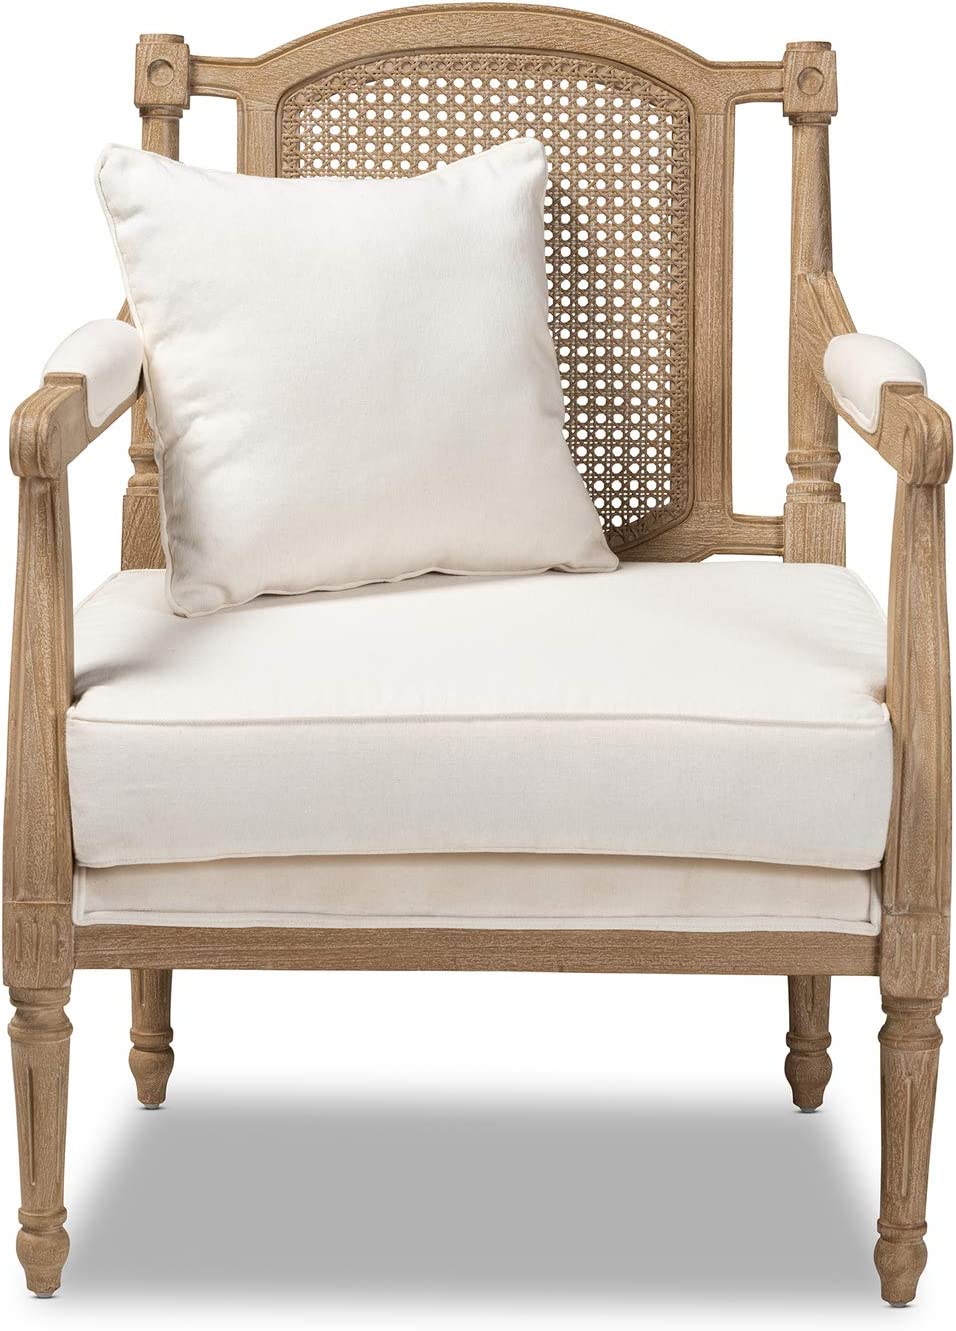 Baxton Studio Clemence Ivory Upholstered Whitewashed Wood Armchair